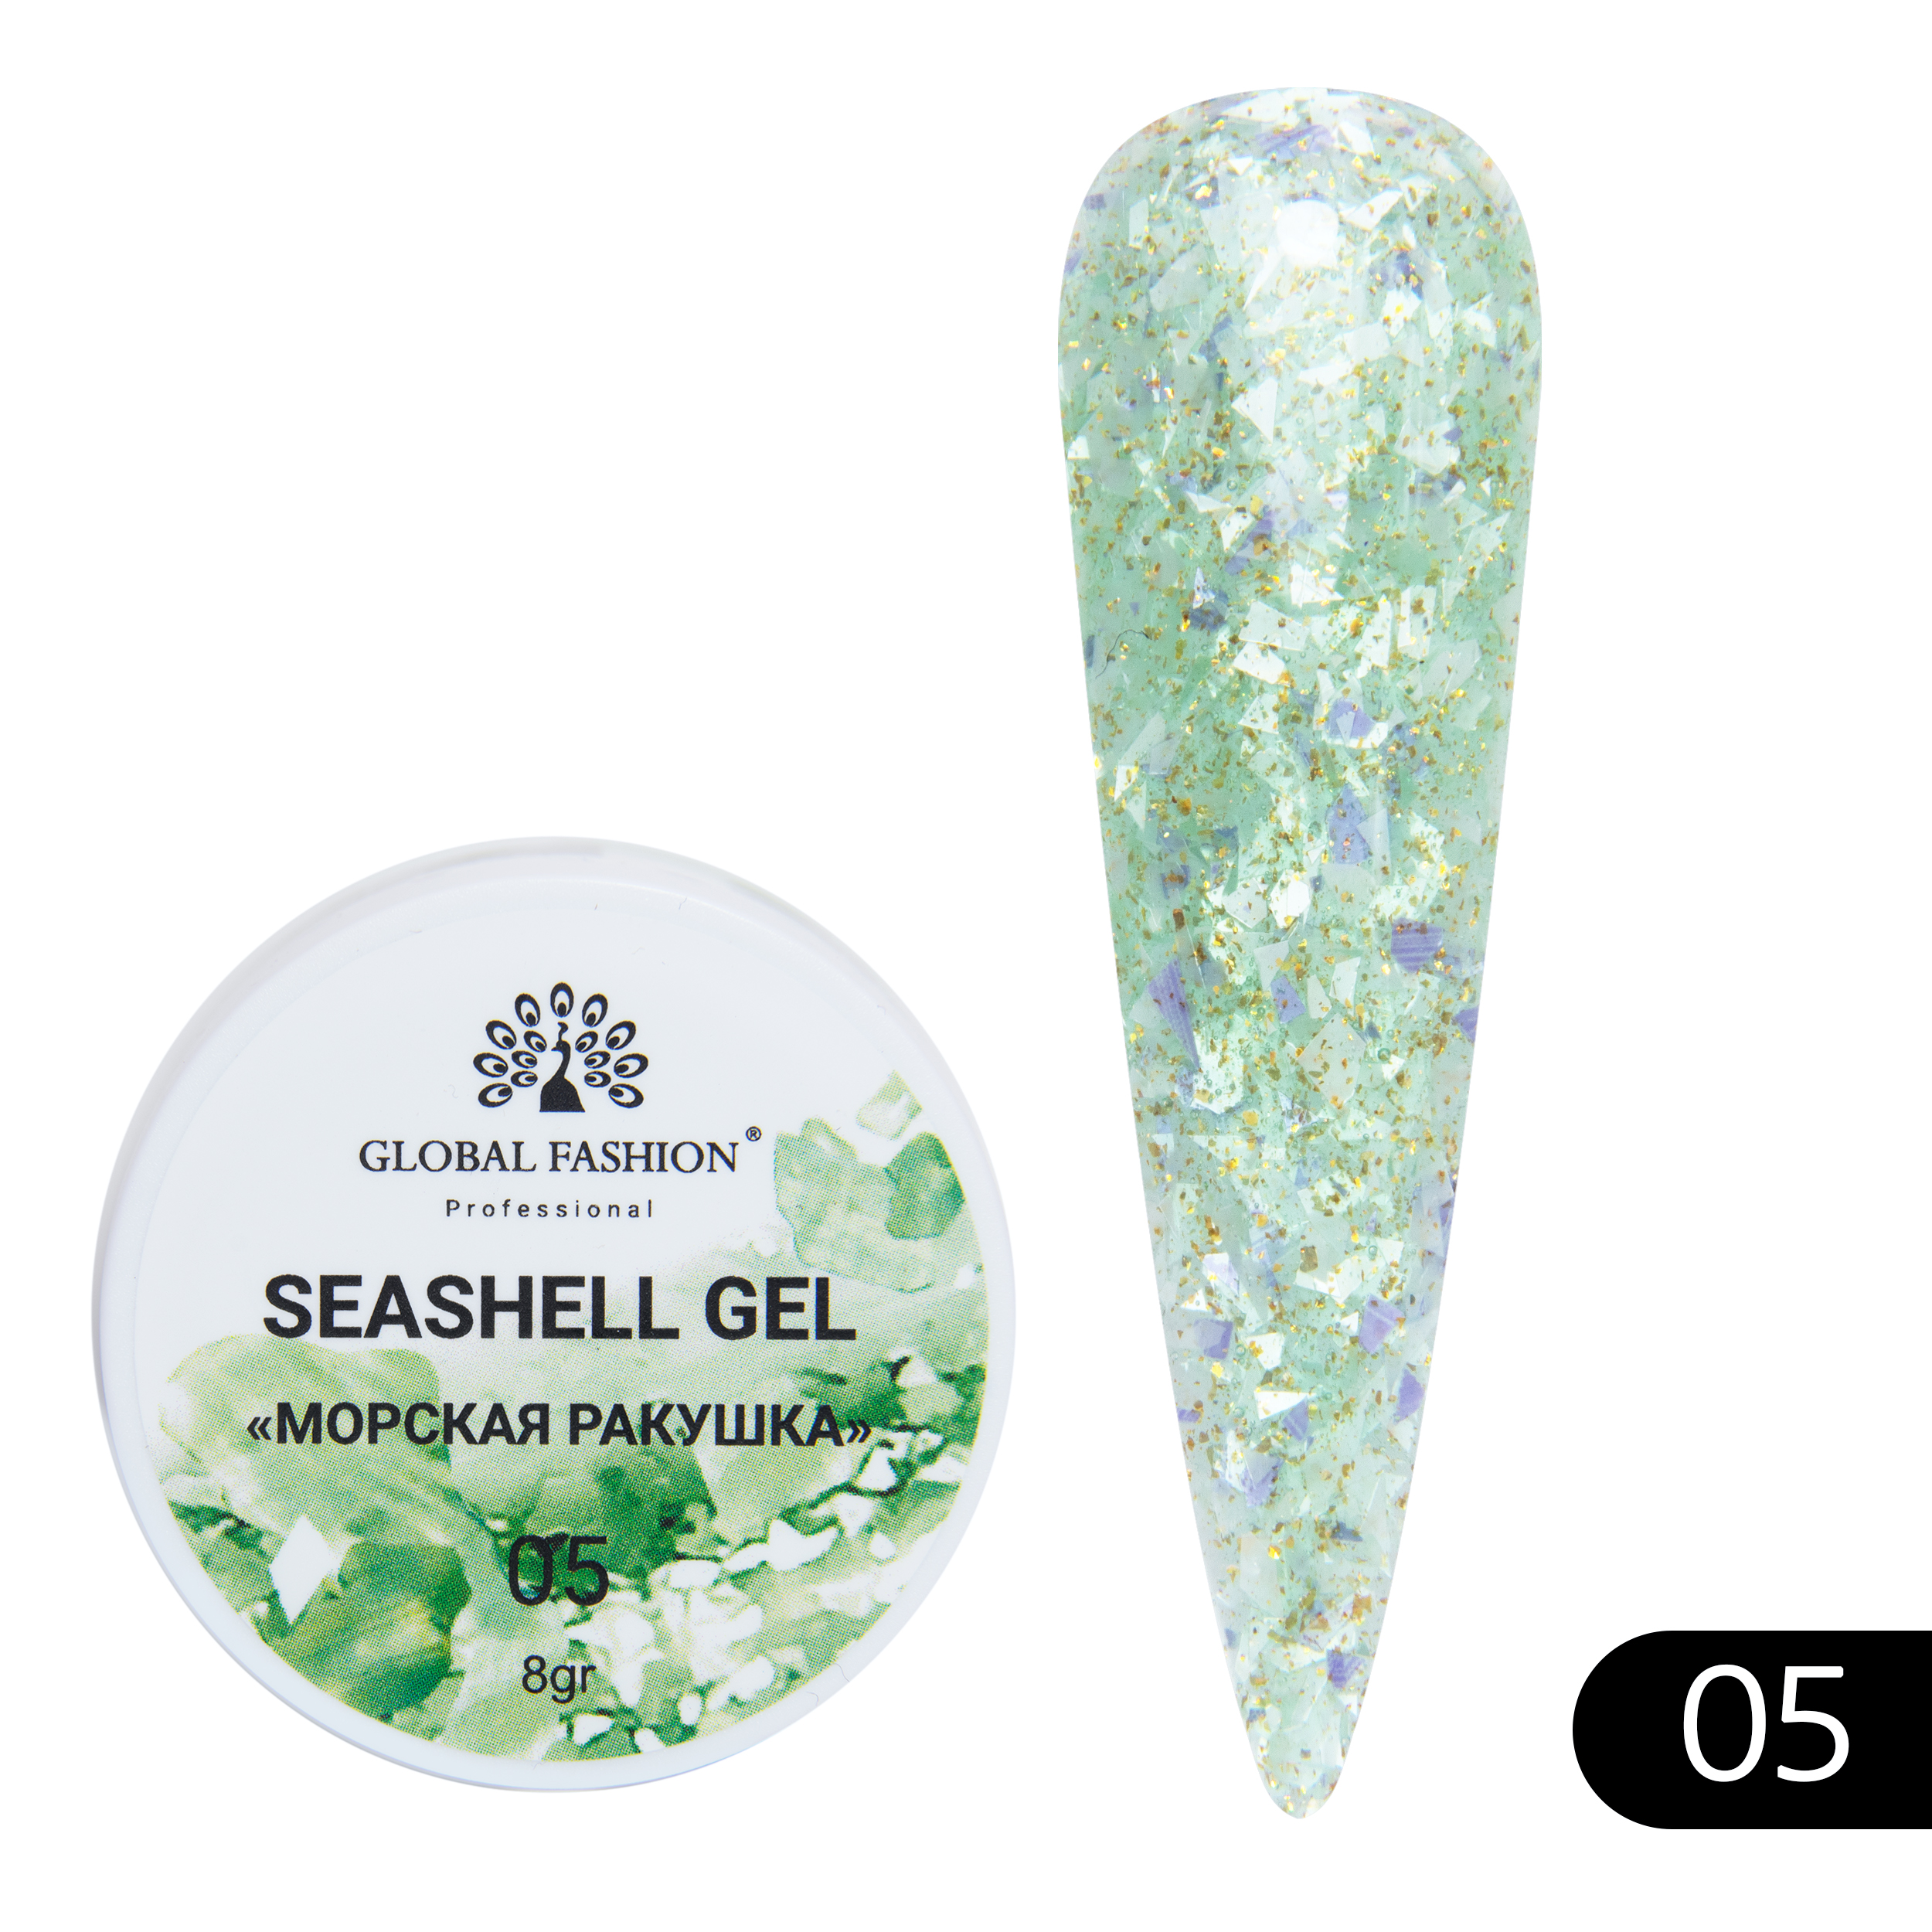 Гель-краска для ногтей Global Fashion с мраморным эффектом ракушки Seashell Gel №05 5 г сачок для аквариумных рыб дарэлл 10 12 см